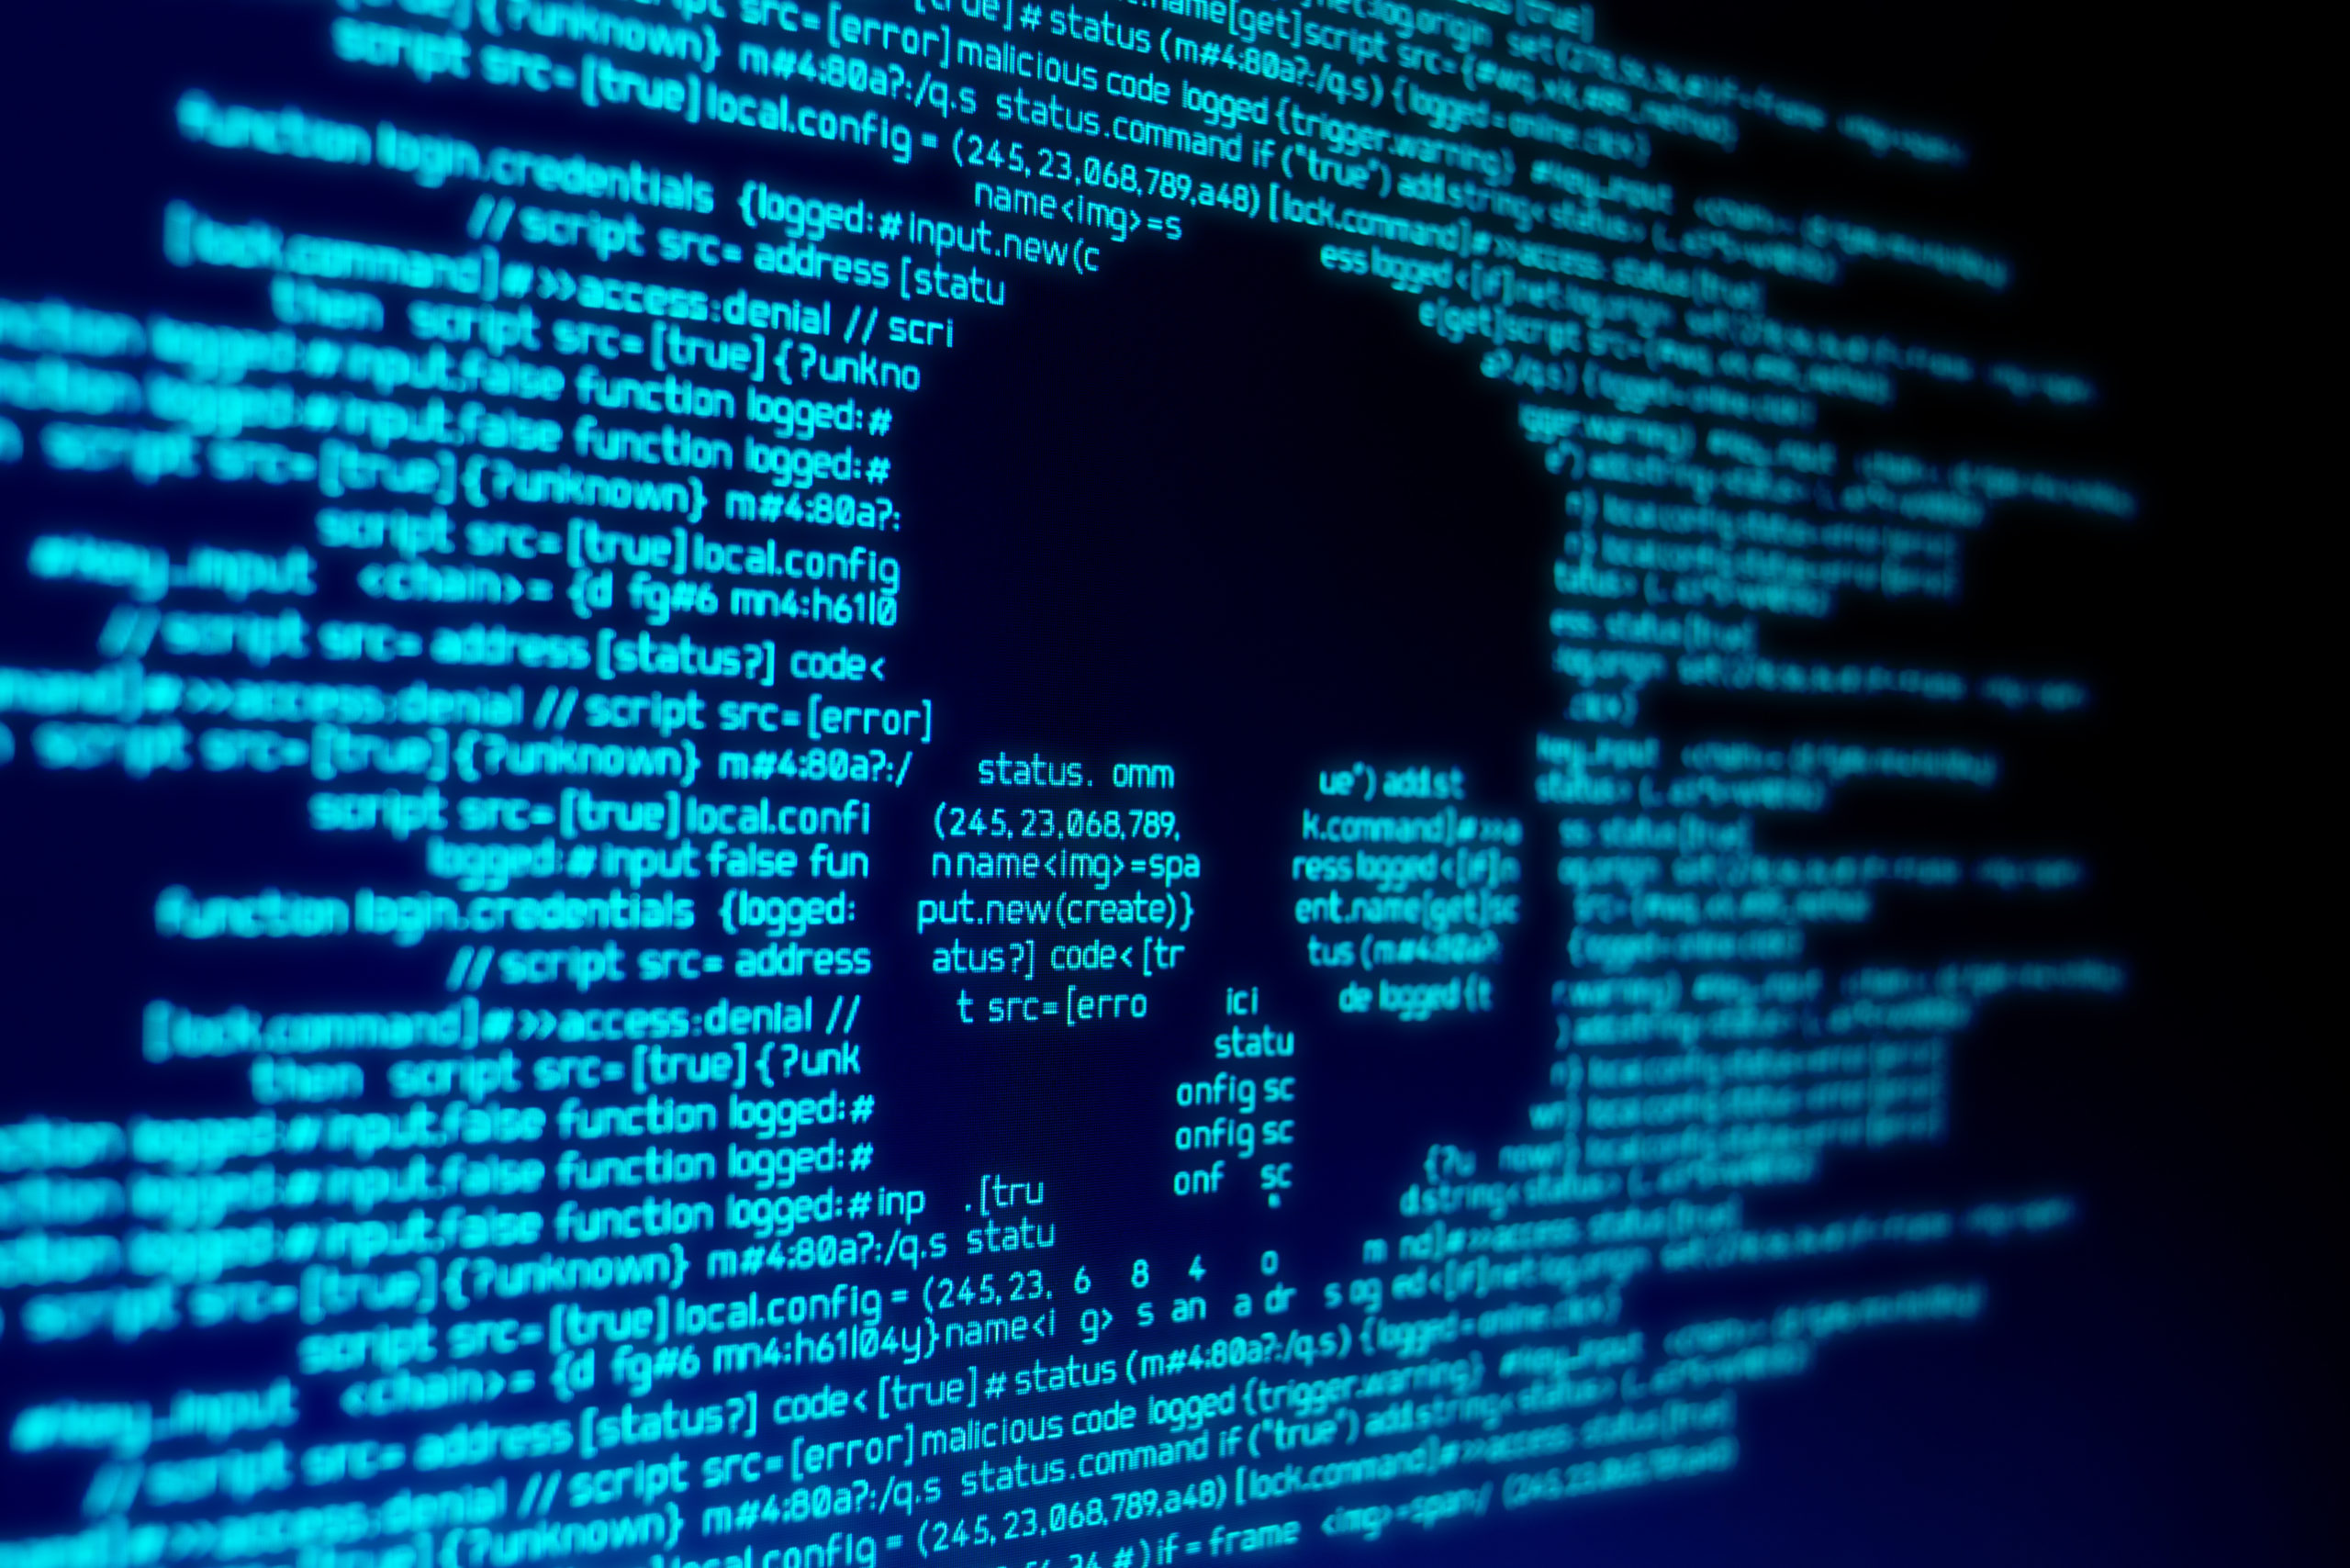 El ransomware, una gran amenaza